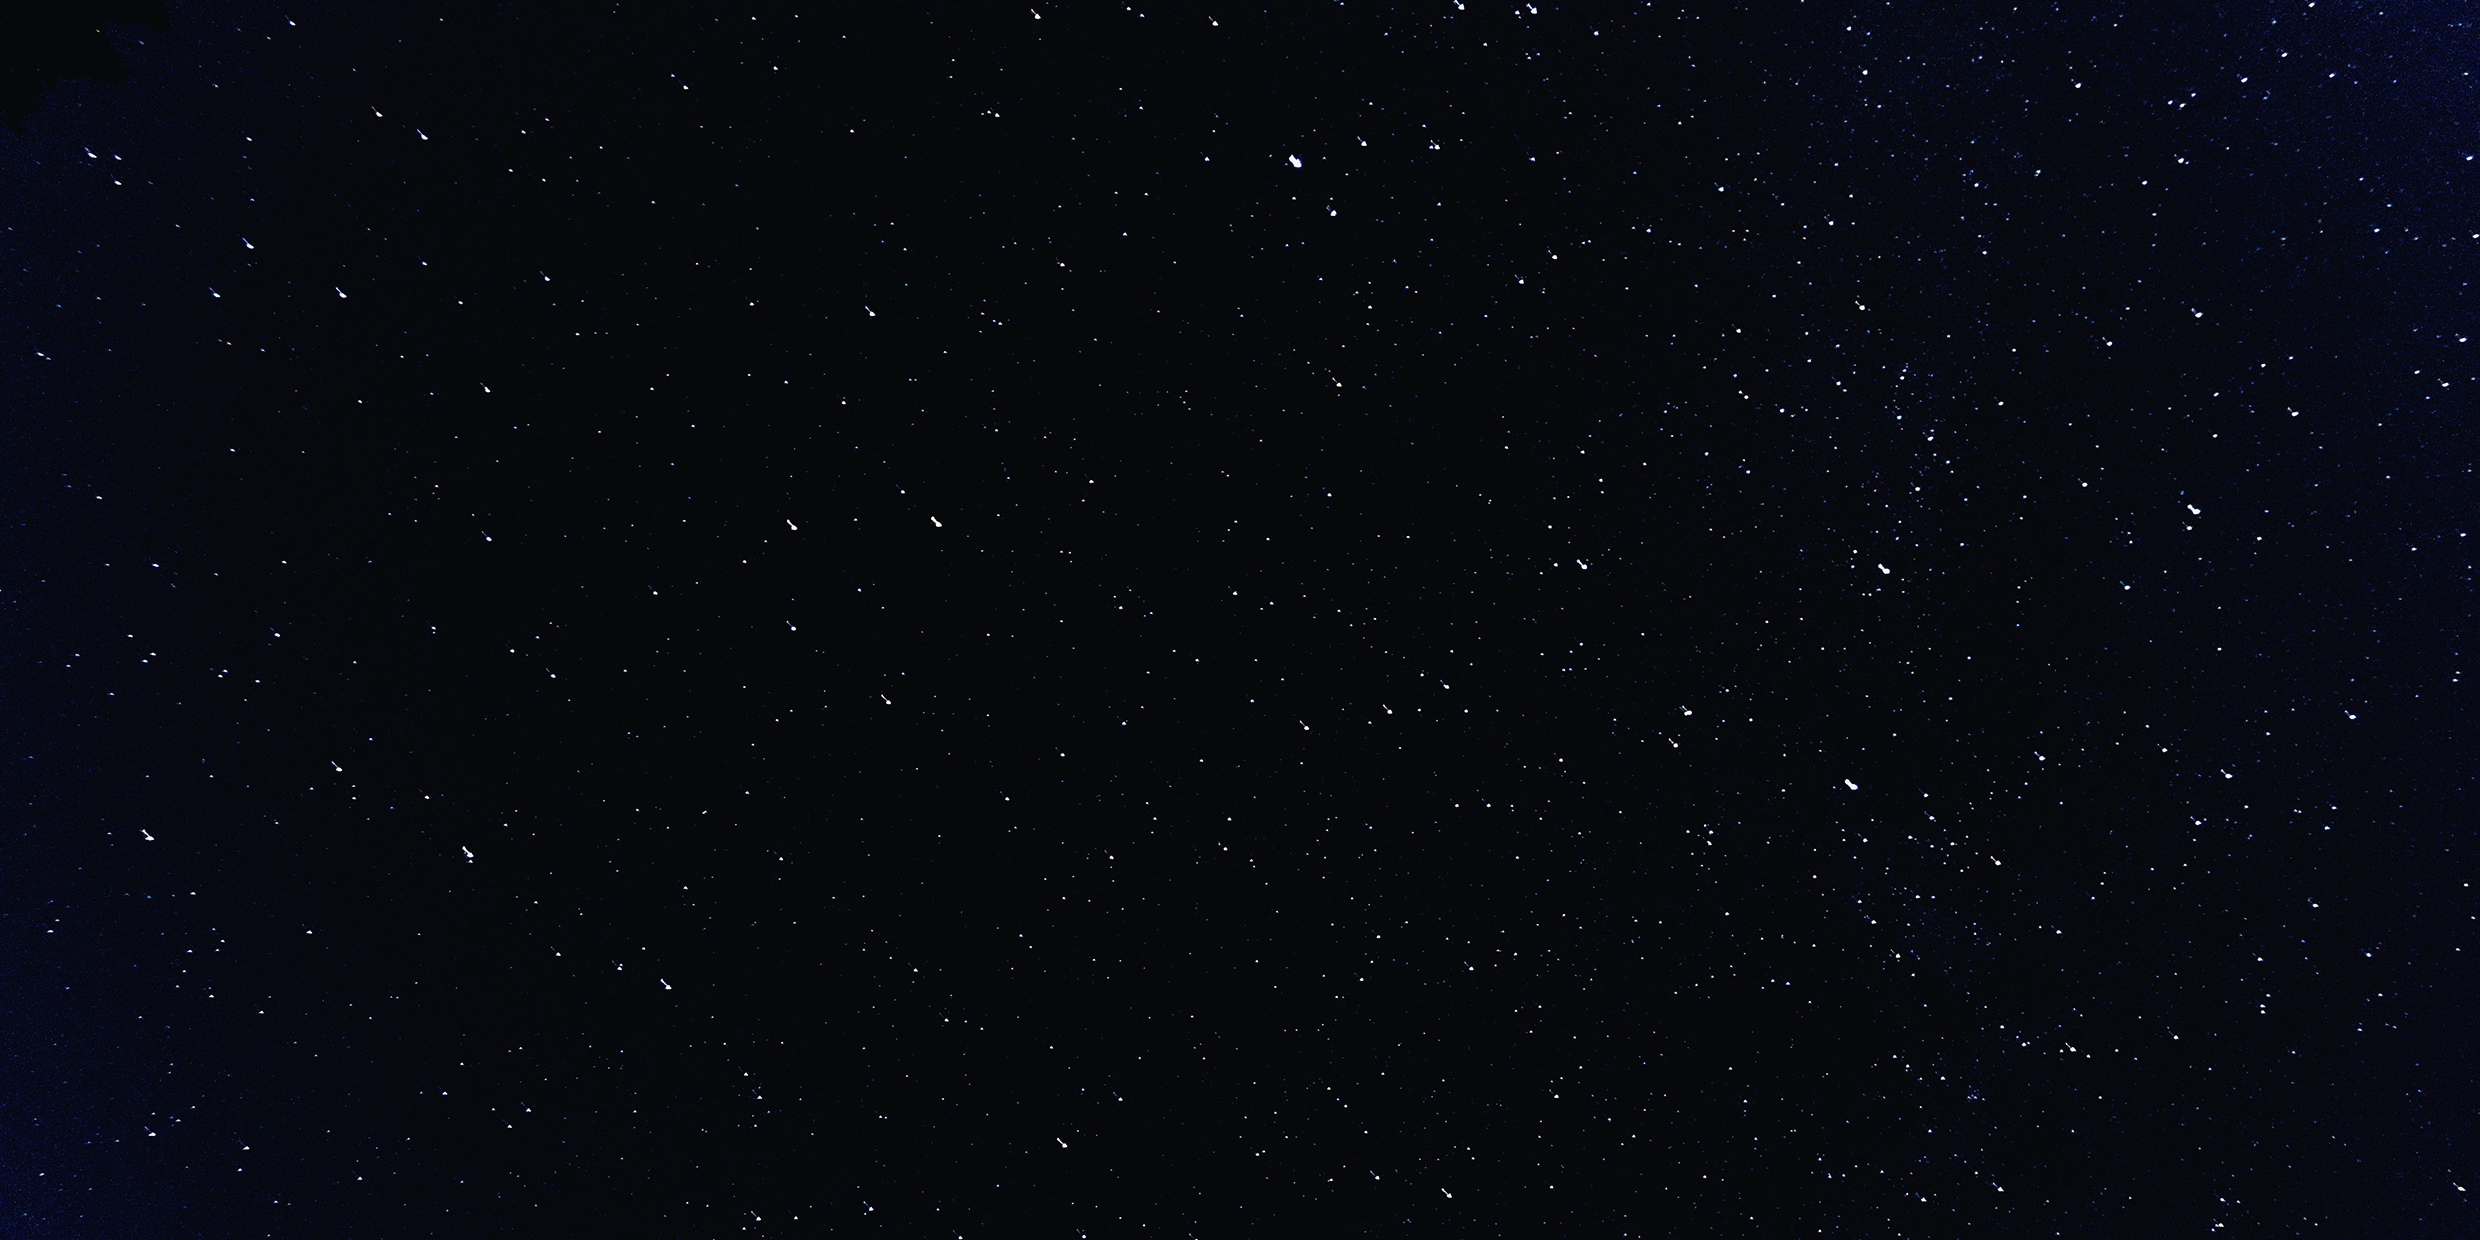 Image of a dark star field at night